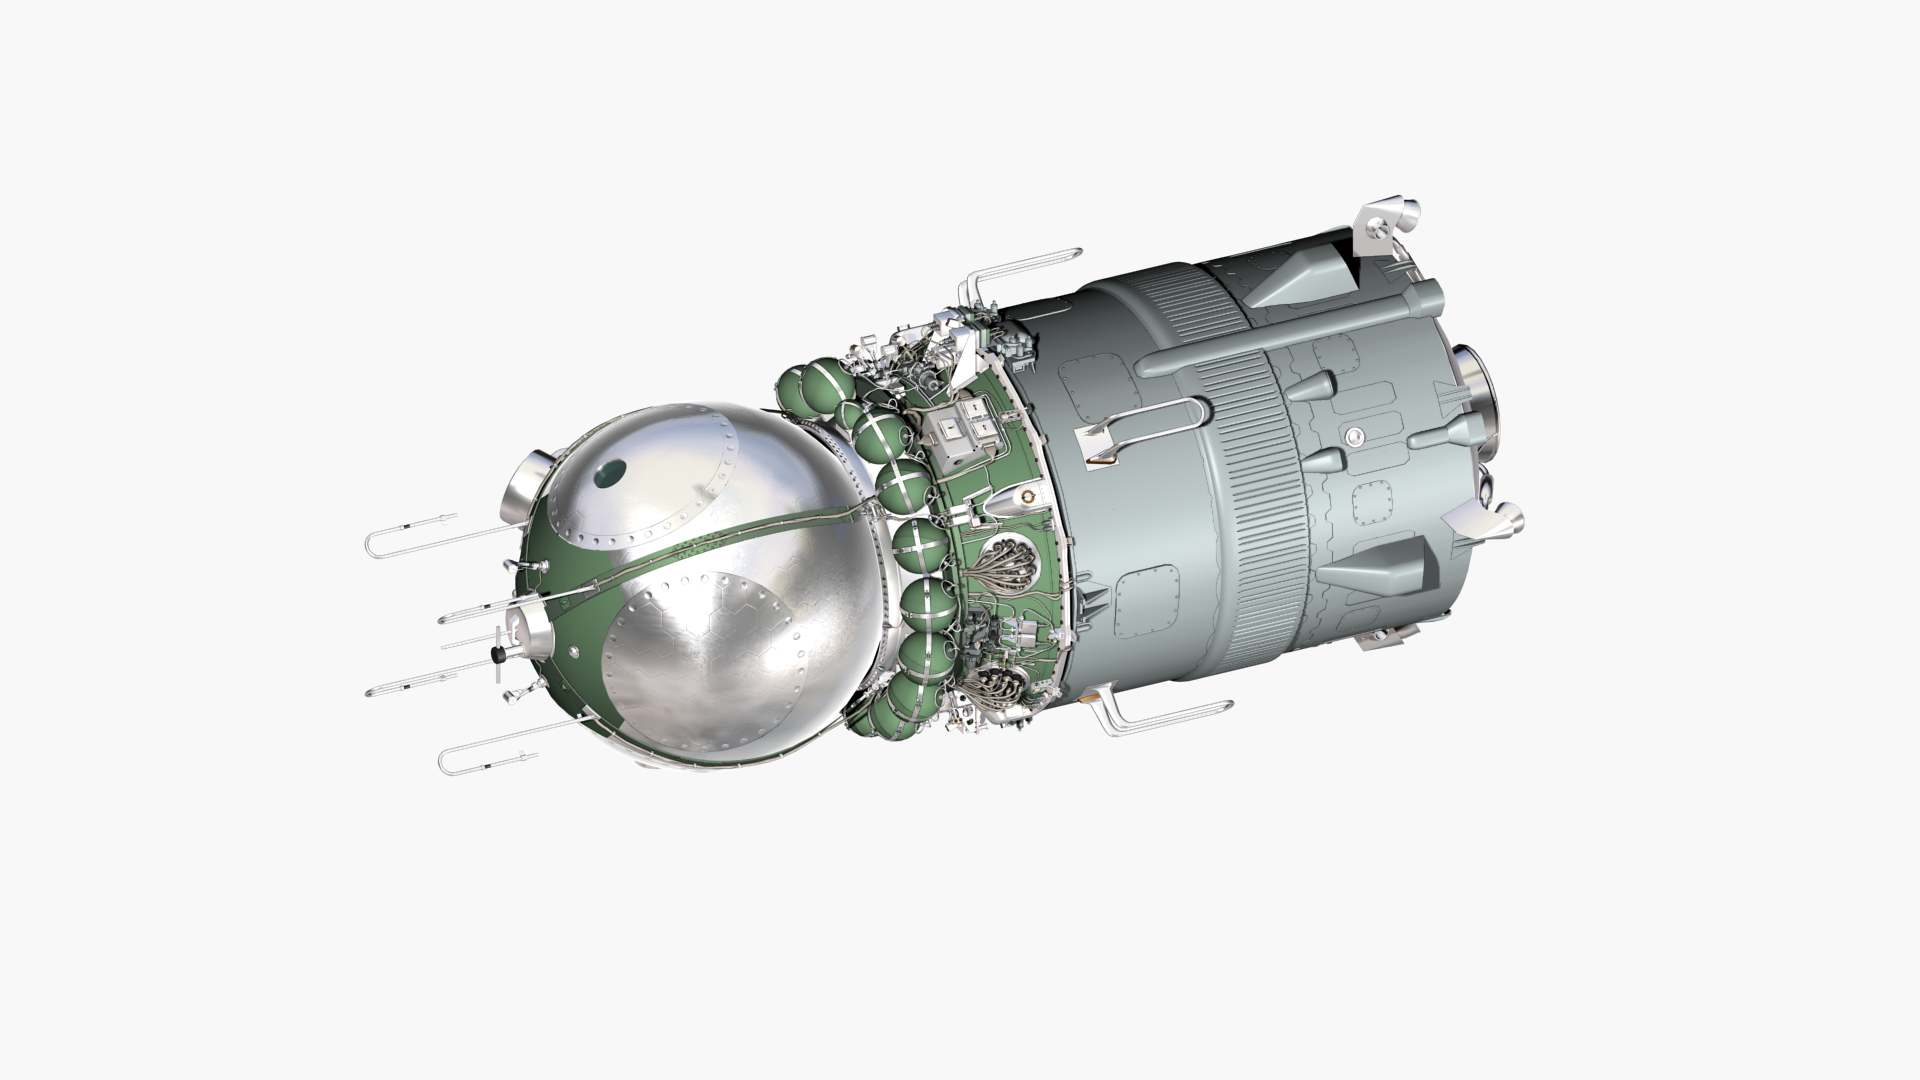 3D model Vostok-1 spacecraft with III rocket stage Block E https://p.turbosquid.com/ts-thumb/Zd/9hYioV/WQ/vostok/jpg/1688392360/1920x1080/turn_fit_q99/3b2eb97115340d7576610111e639618ad4e076f7/vostok-1.jpg